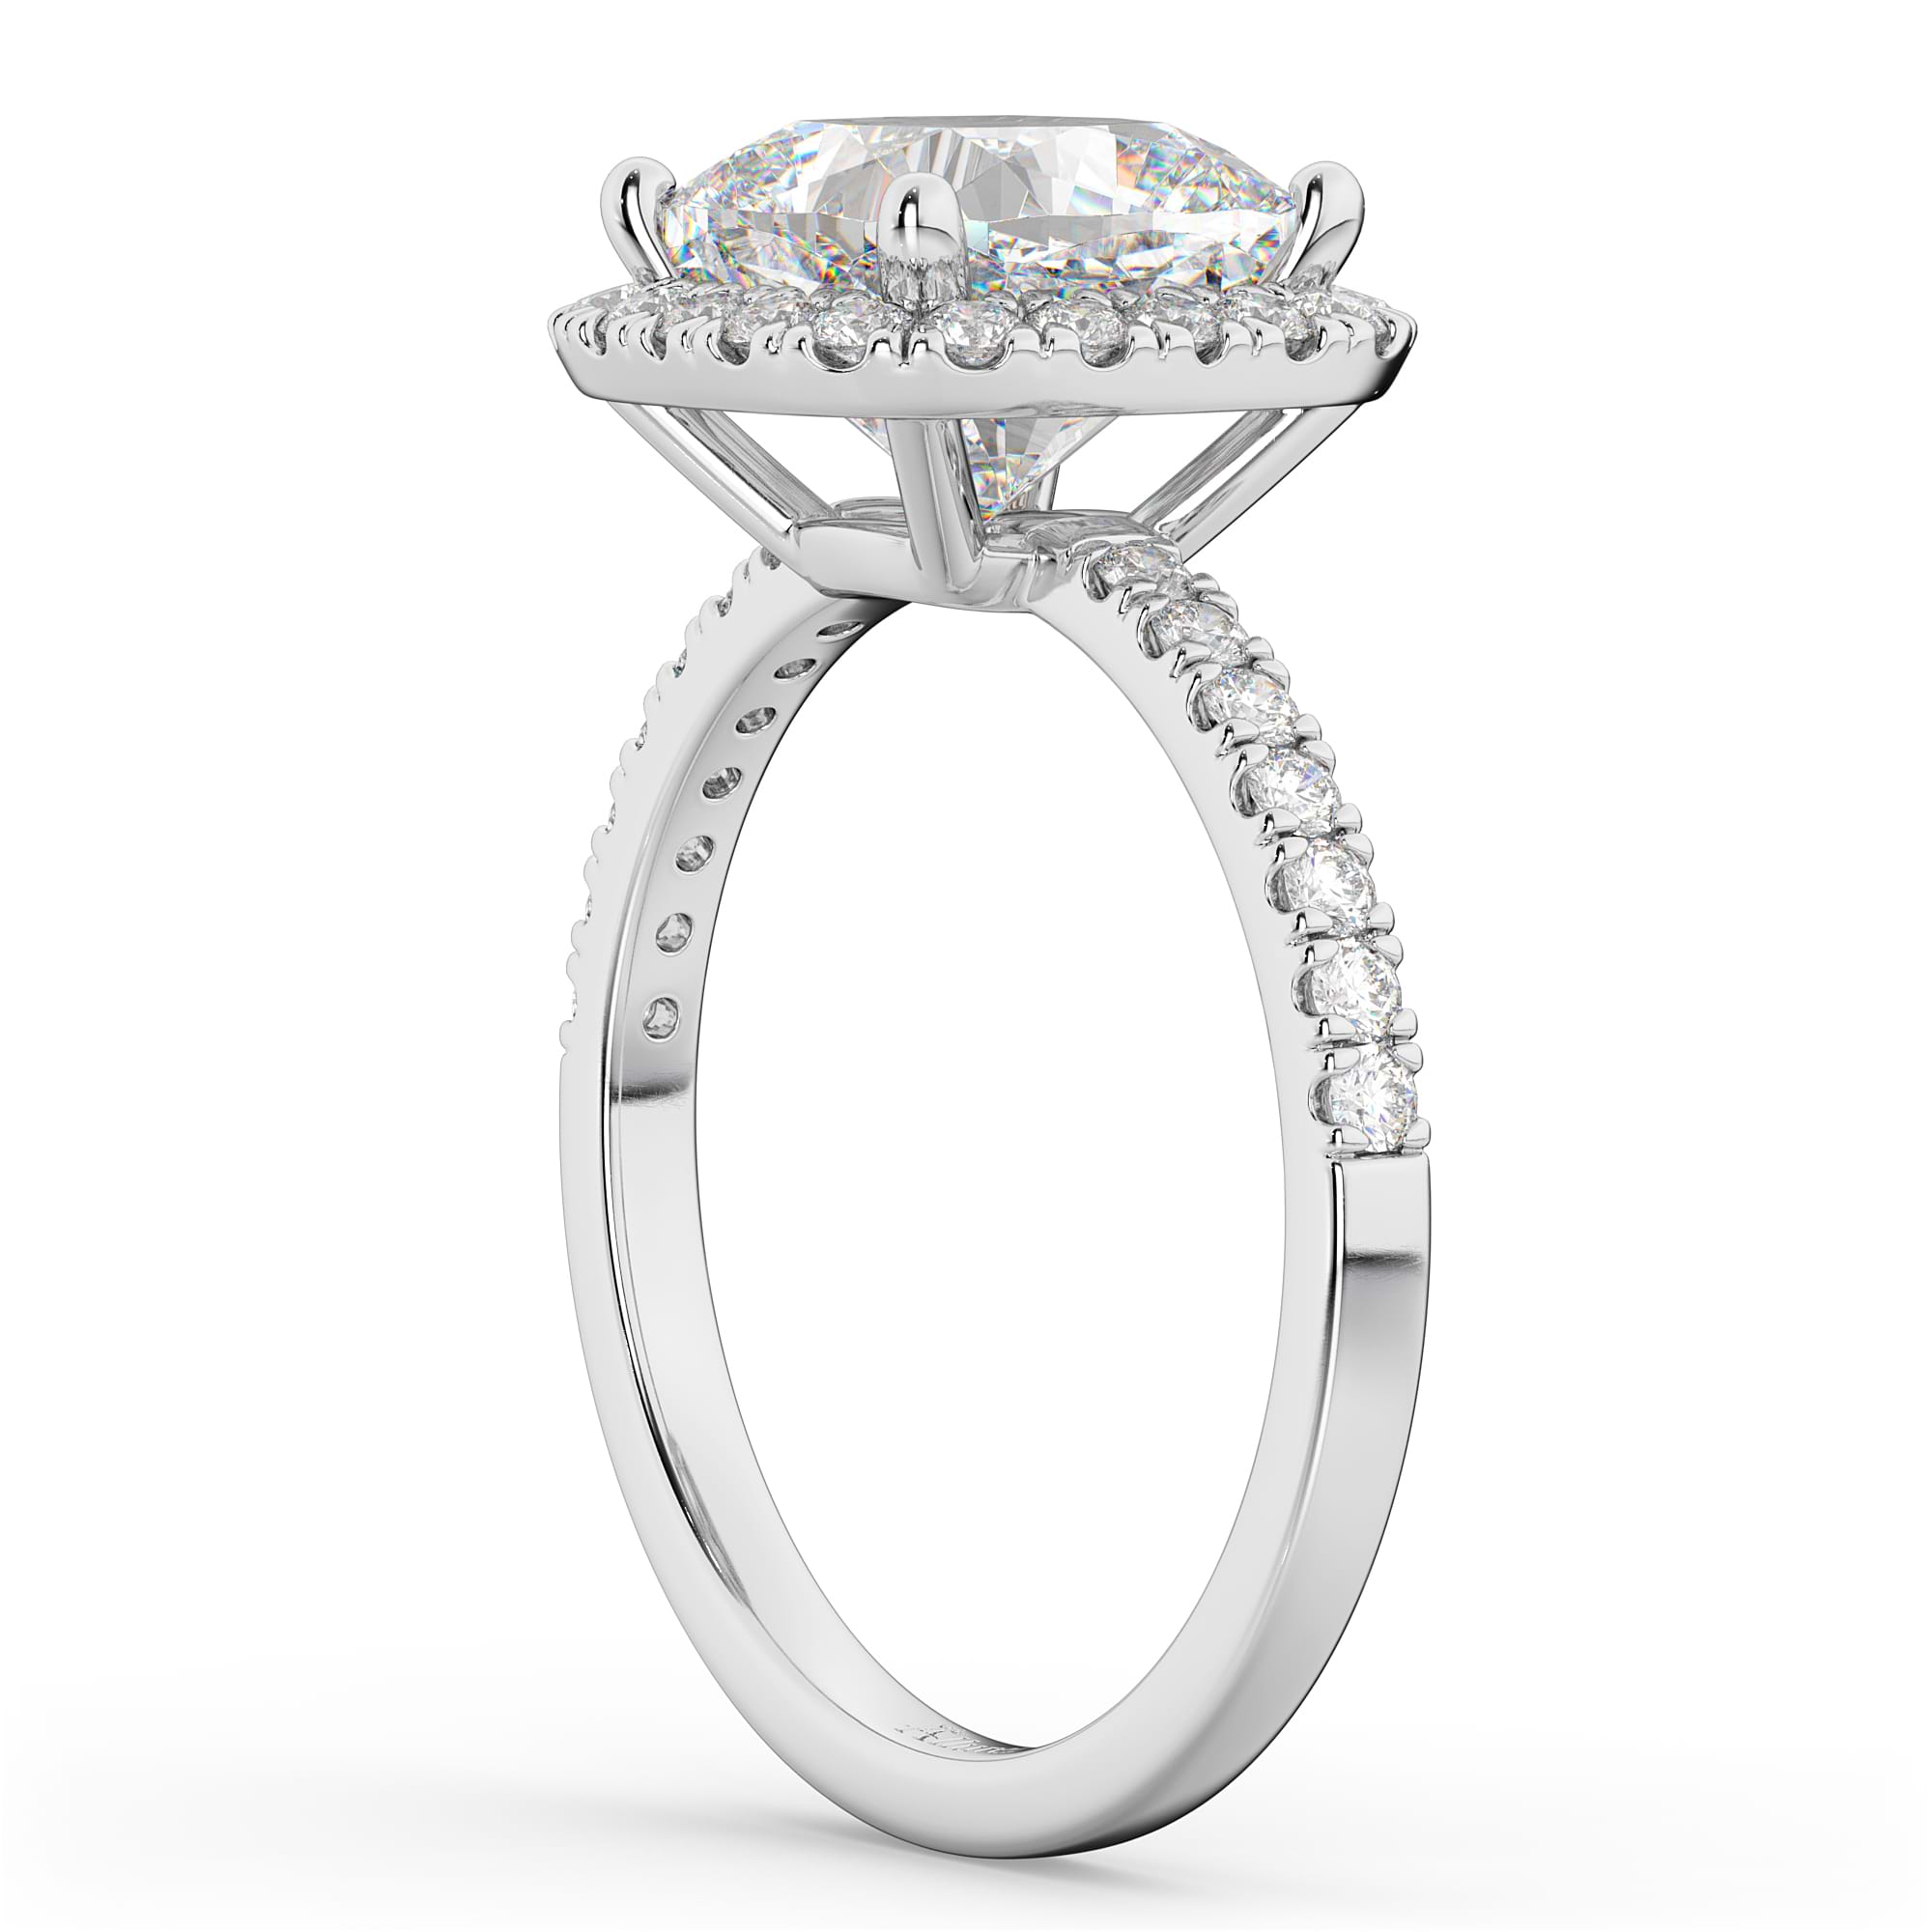 Cushion Cut Halo Diamond Engagement Ring 14k White Gold (2.55ct)